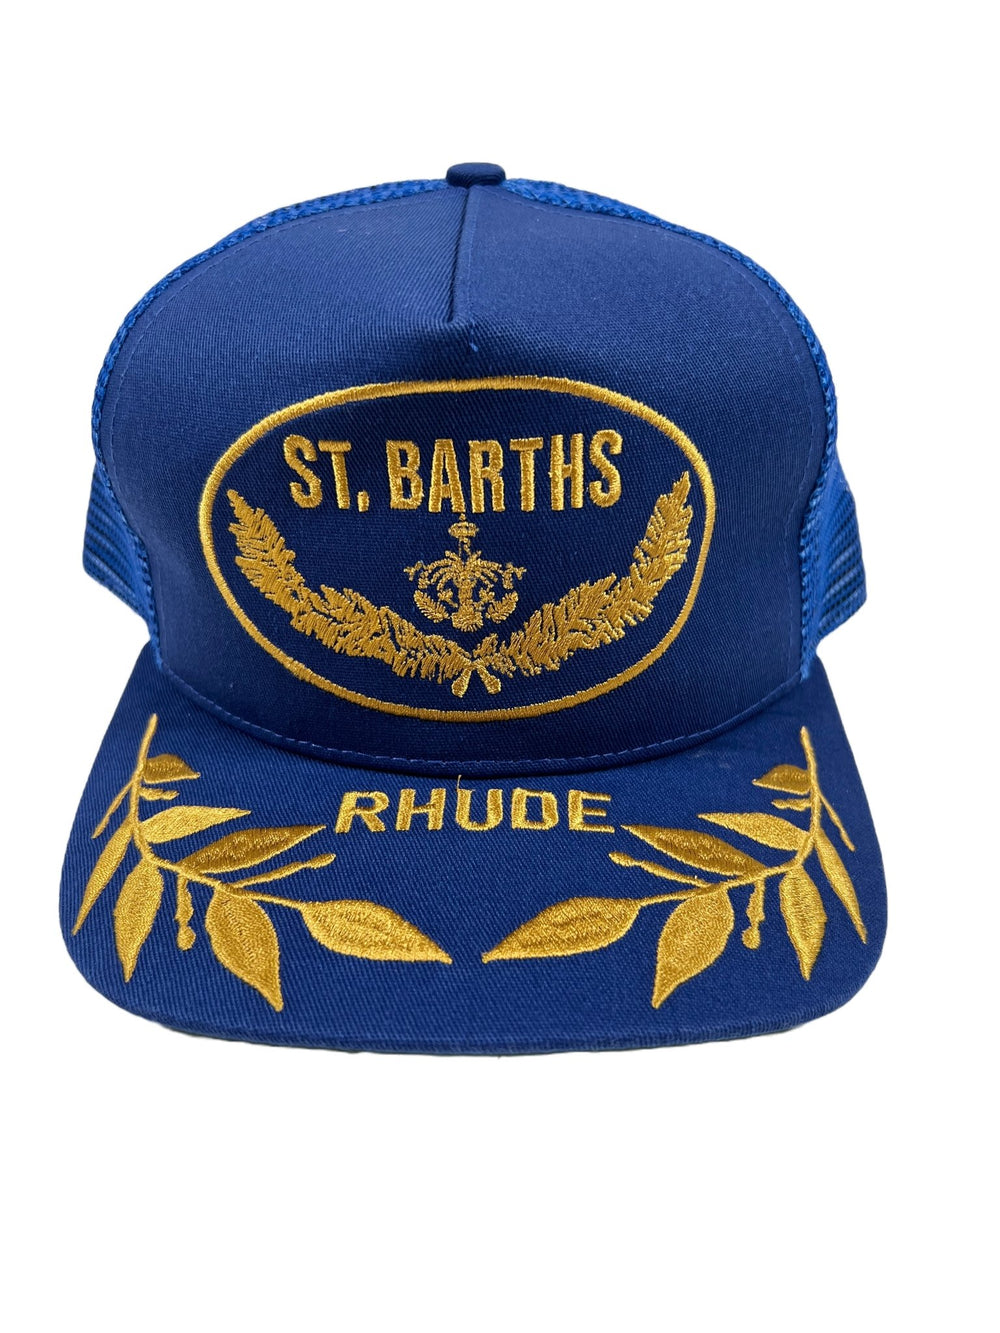 St Bartholomew RHUDE DOUBLER HAT COBALT BLUE embroidered trucker hat.